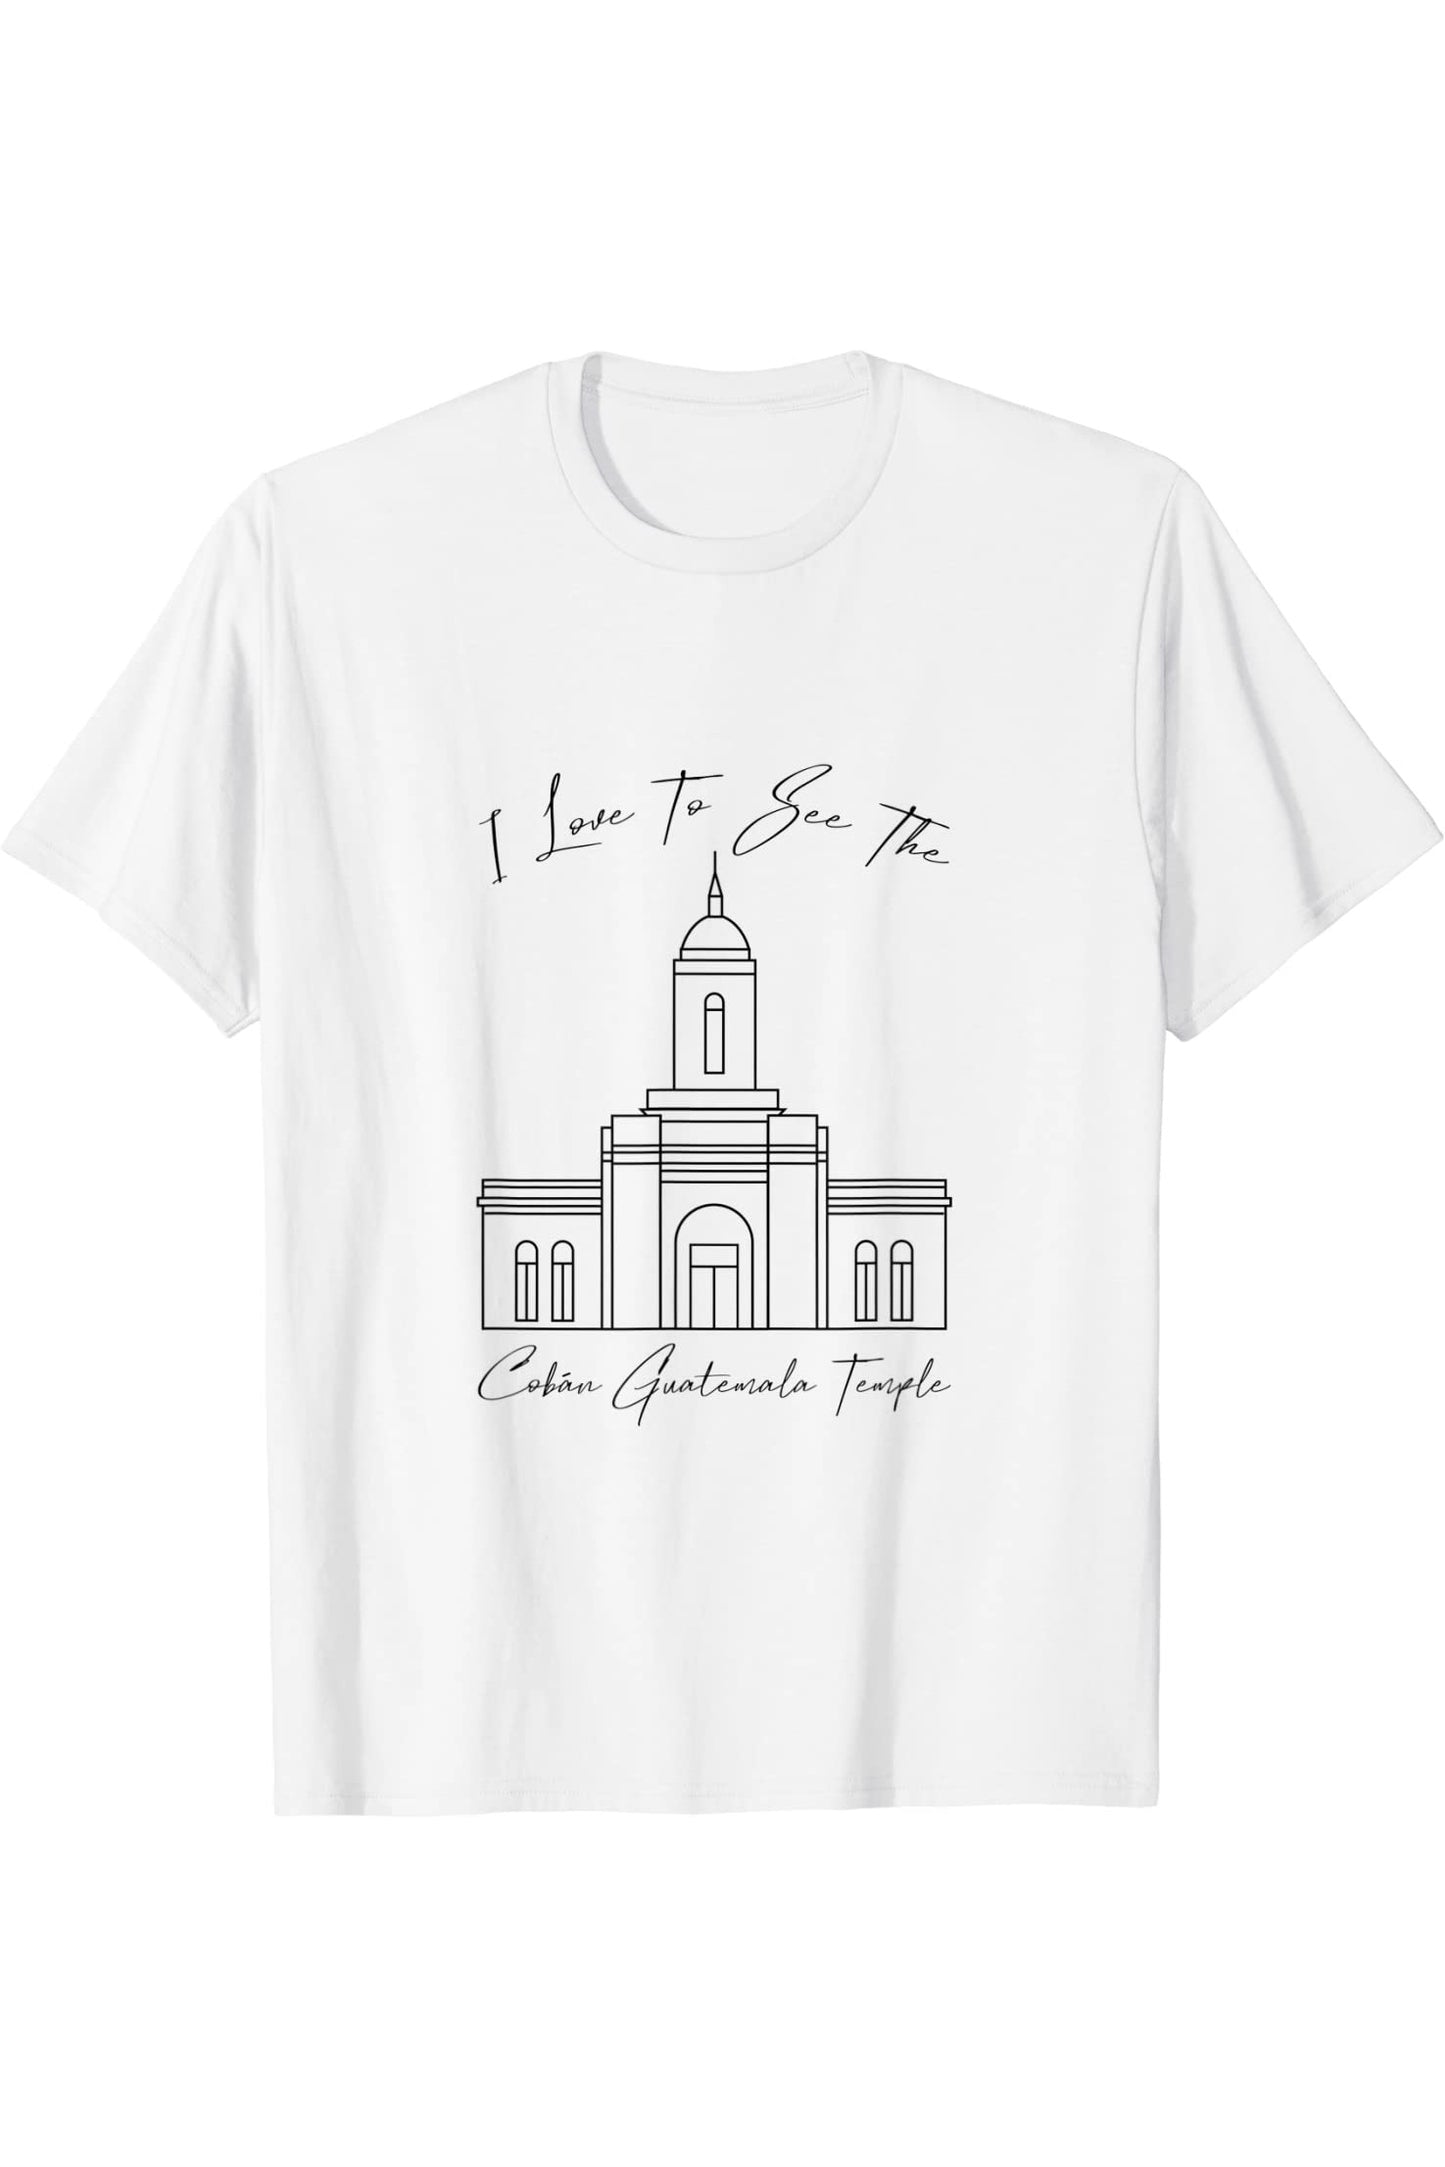 Coban Guatemala Temple T-Shirt - Calligraphy Style (English) US